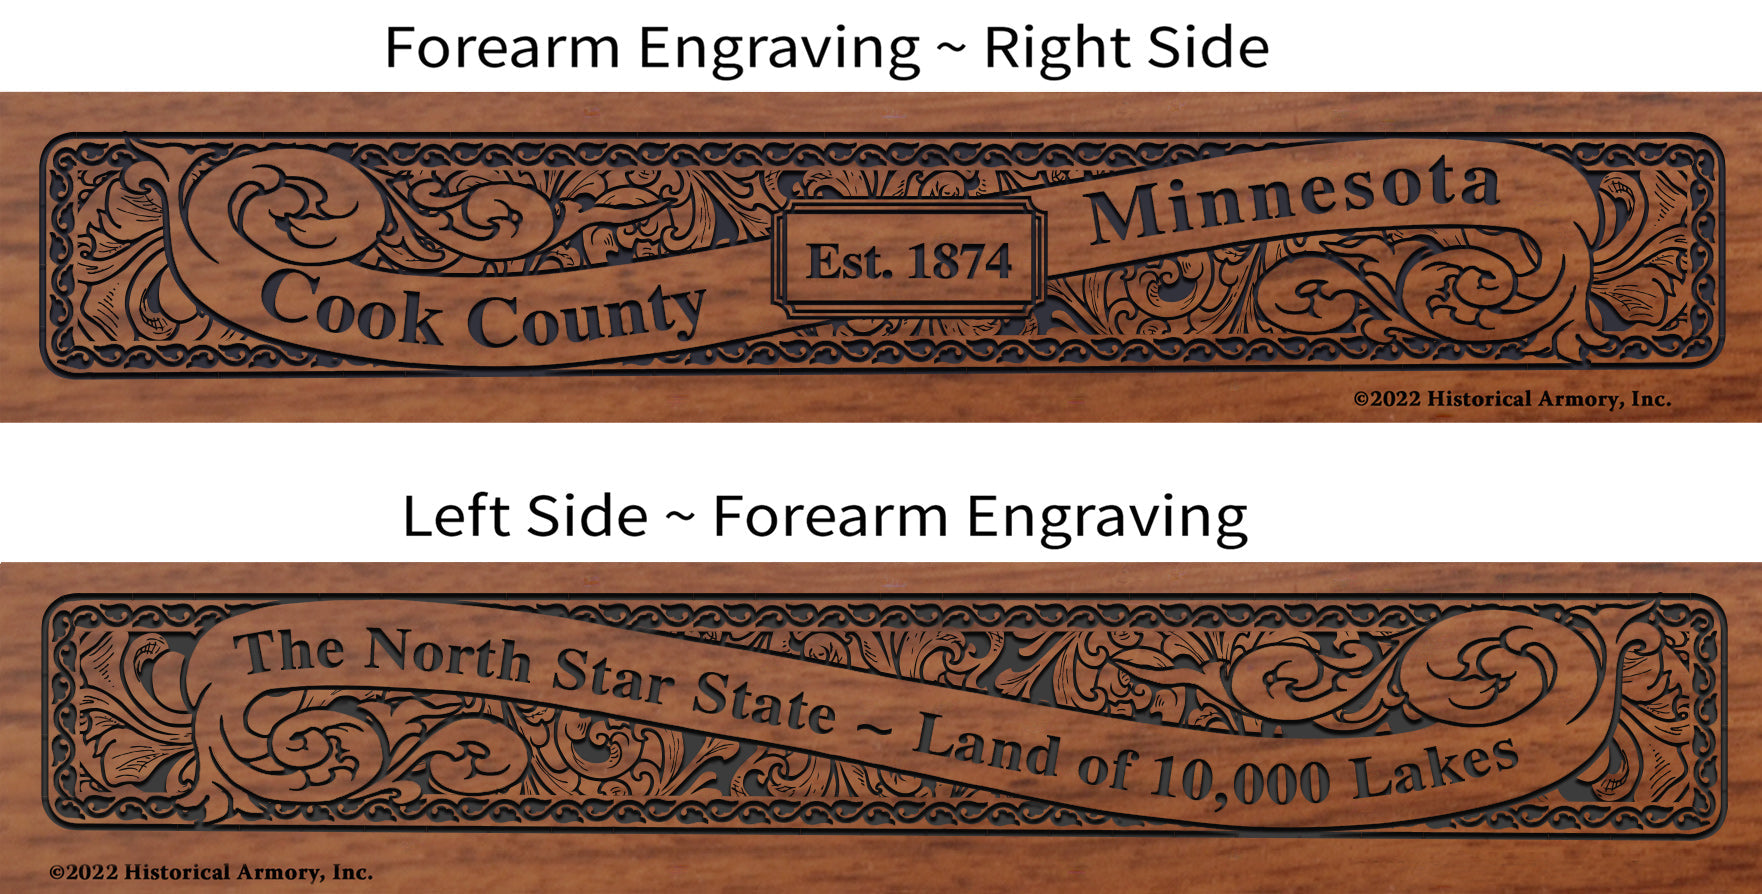 Cook County Minnesota Engraved Rifle Forearm